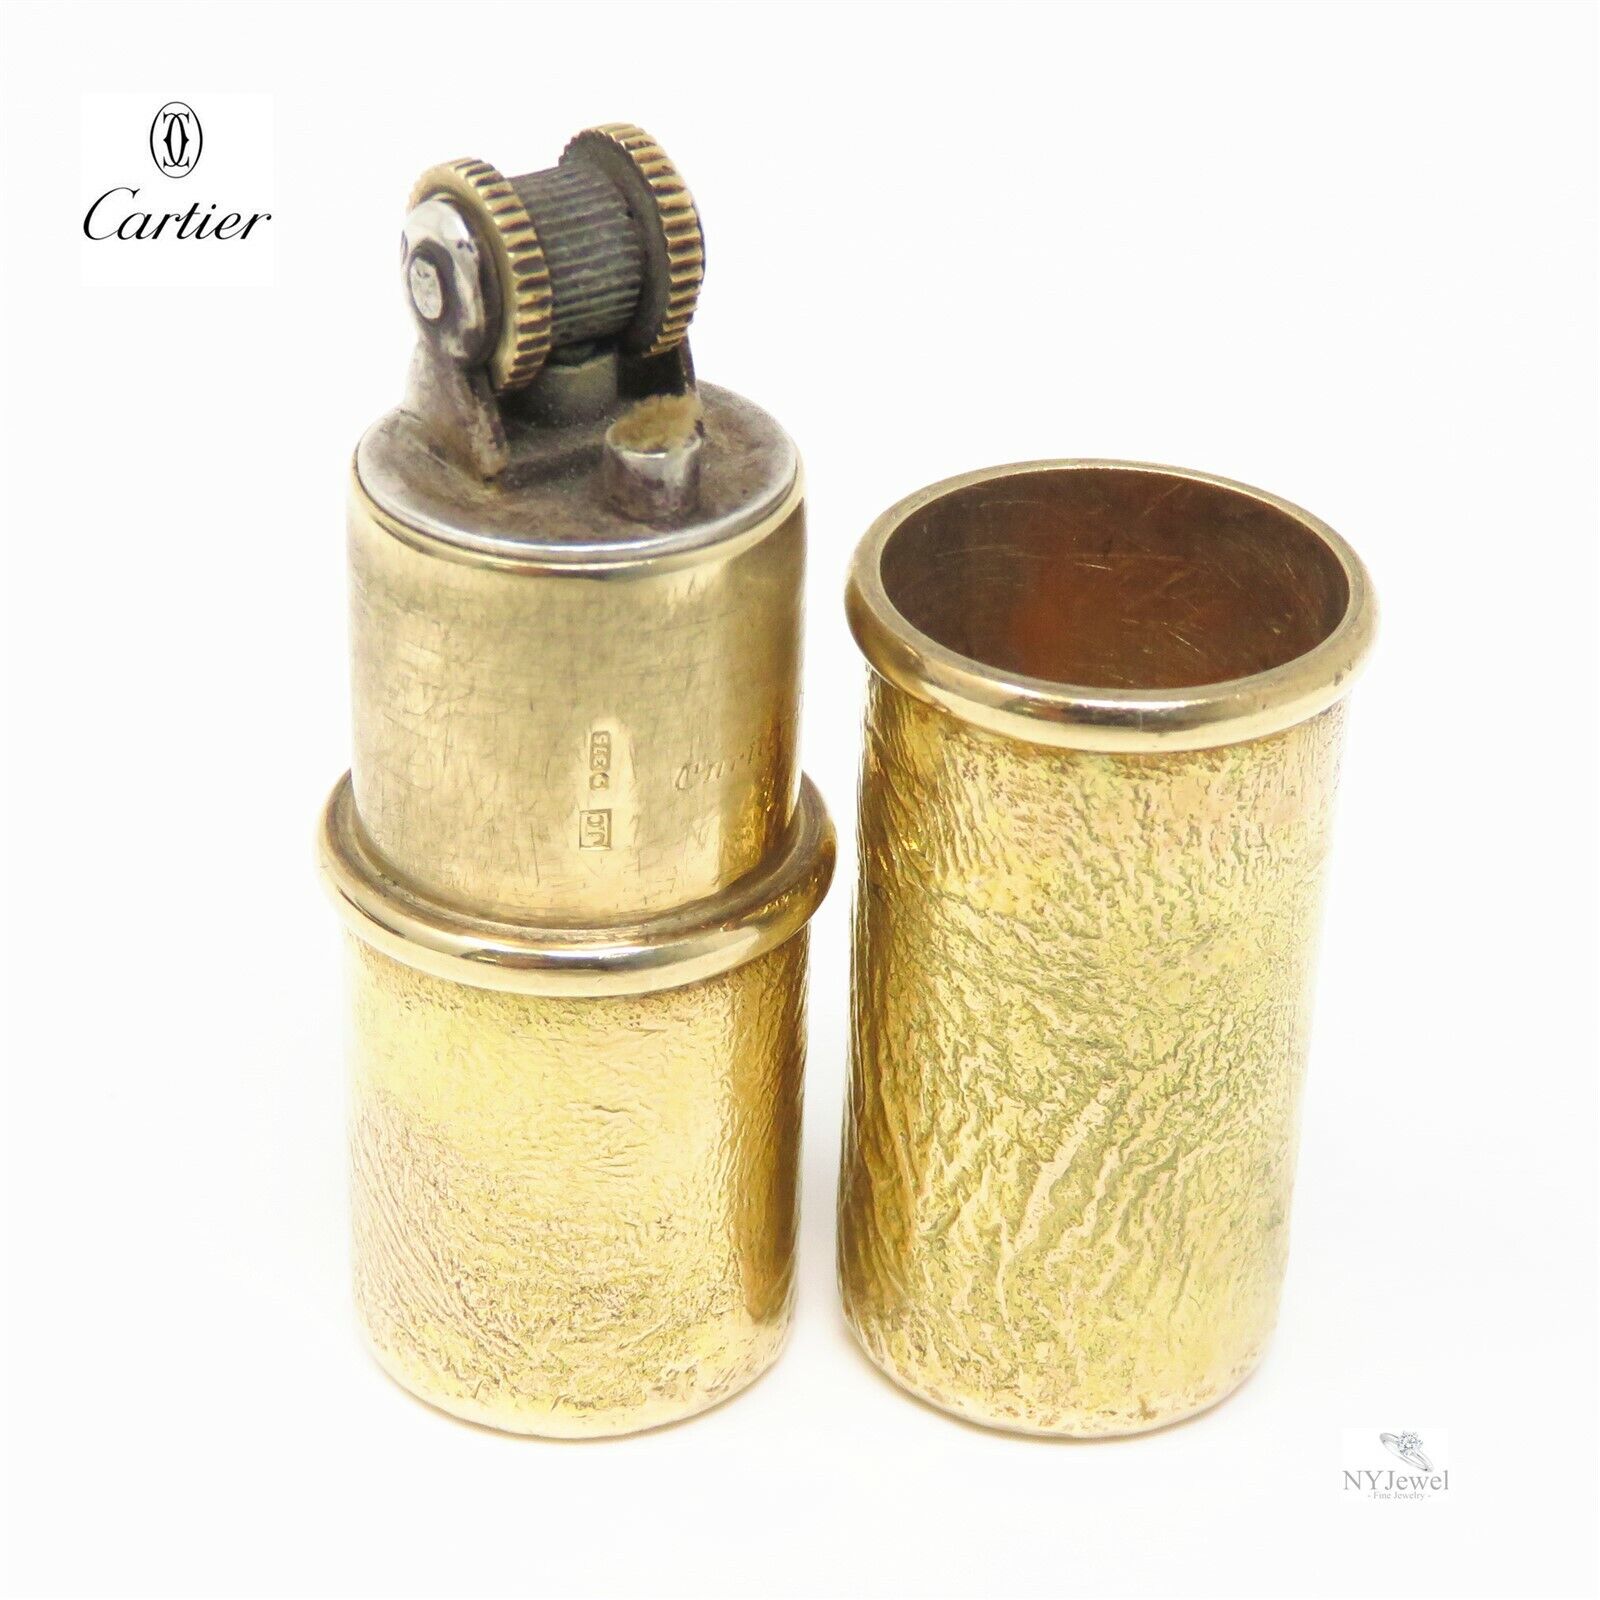 NYJEWEL Cartier London 9k Gold Lipstick Cigarette Lighter